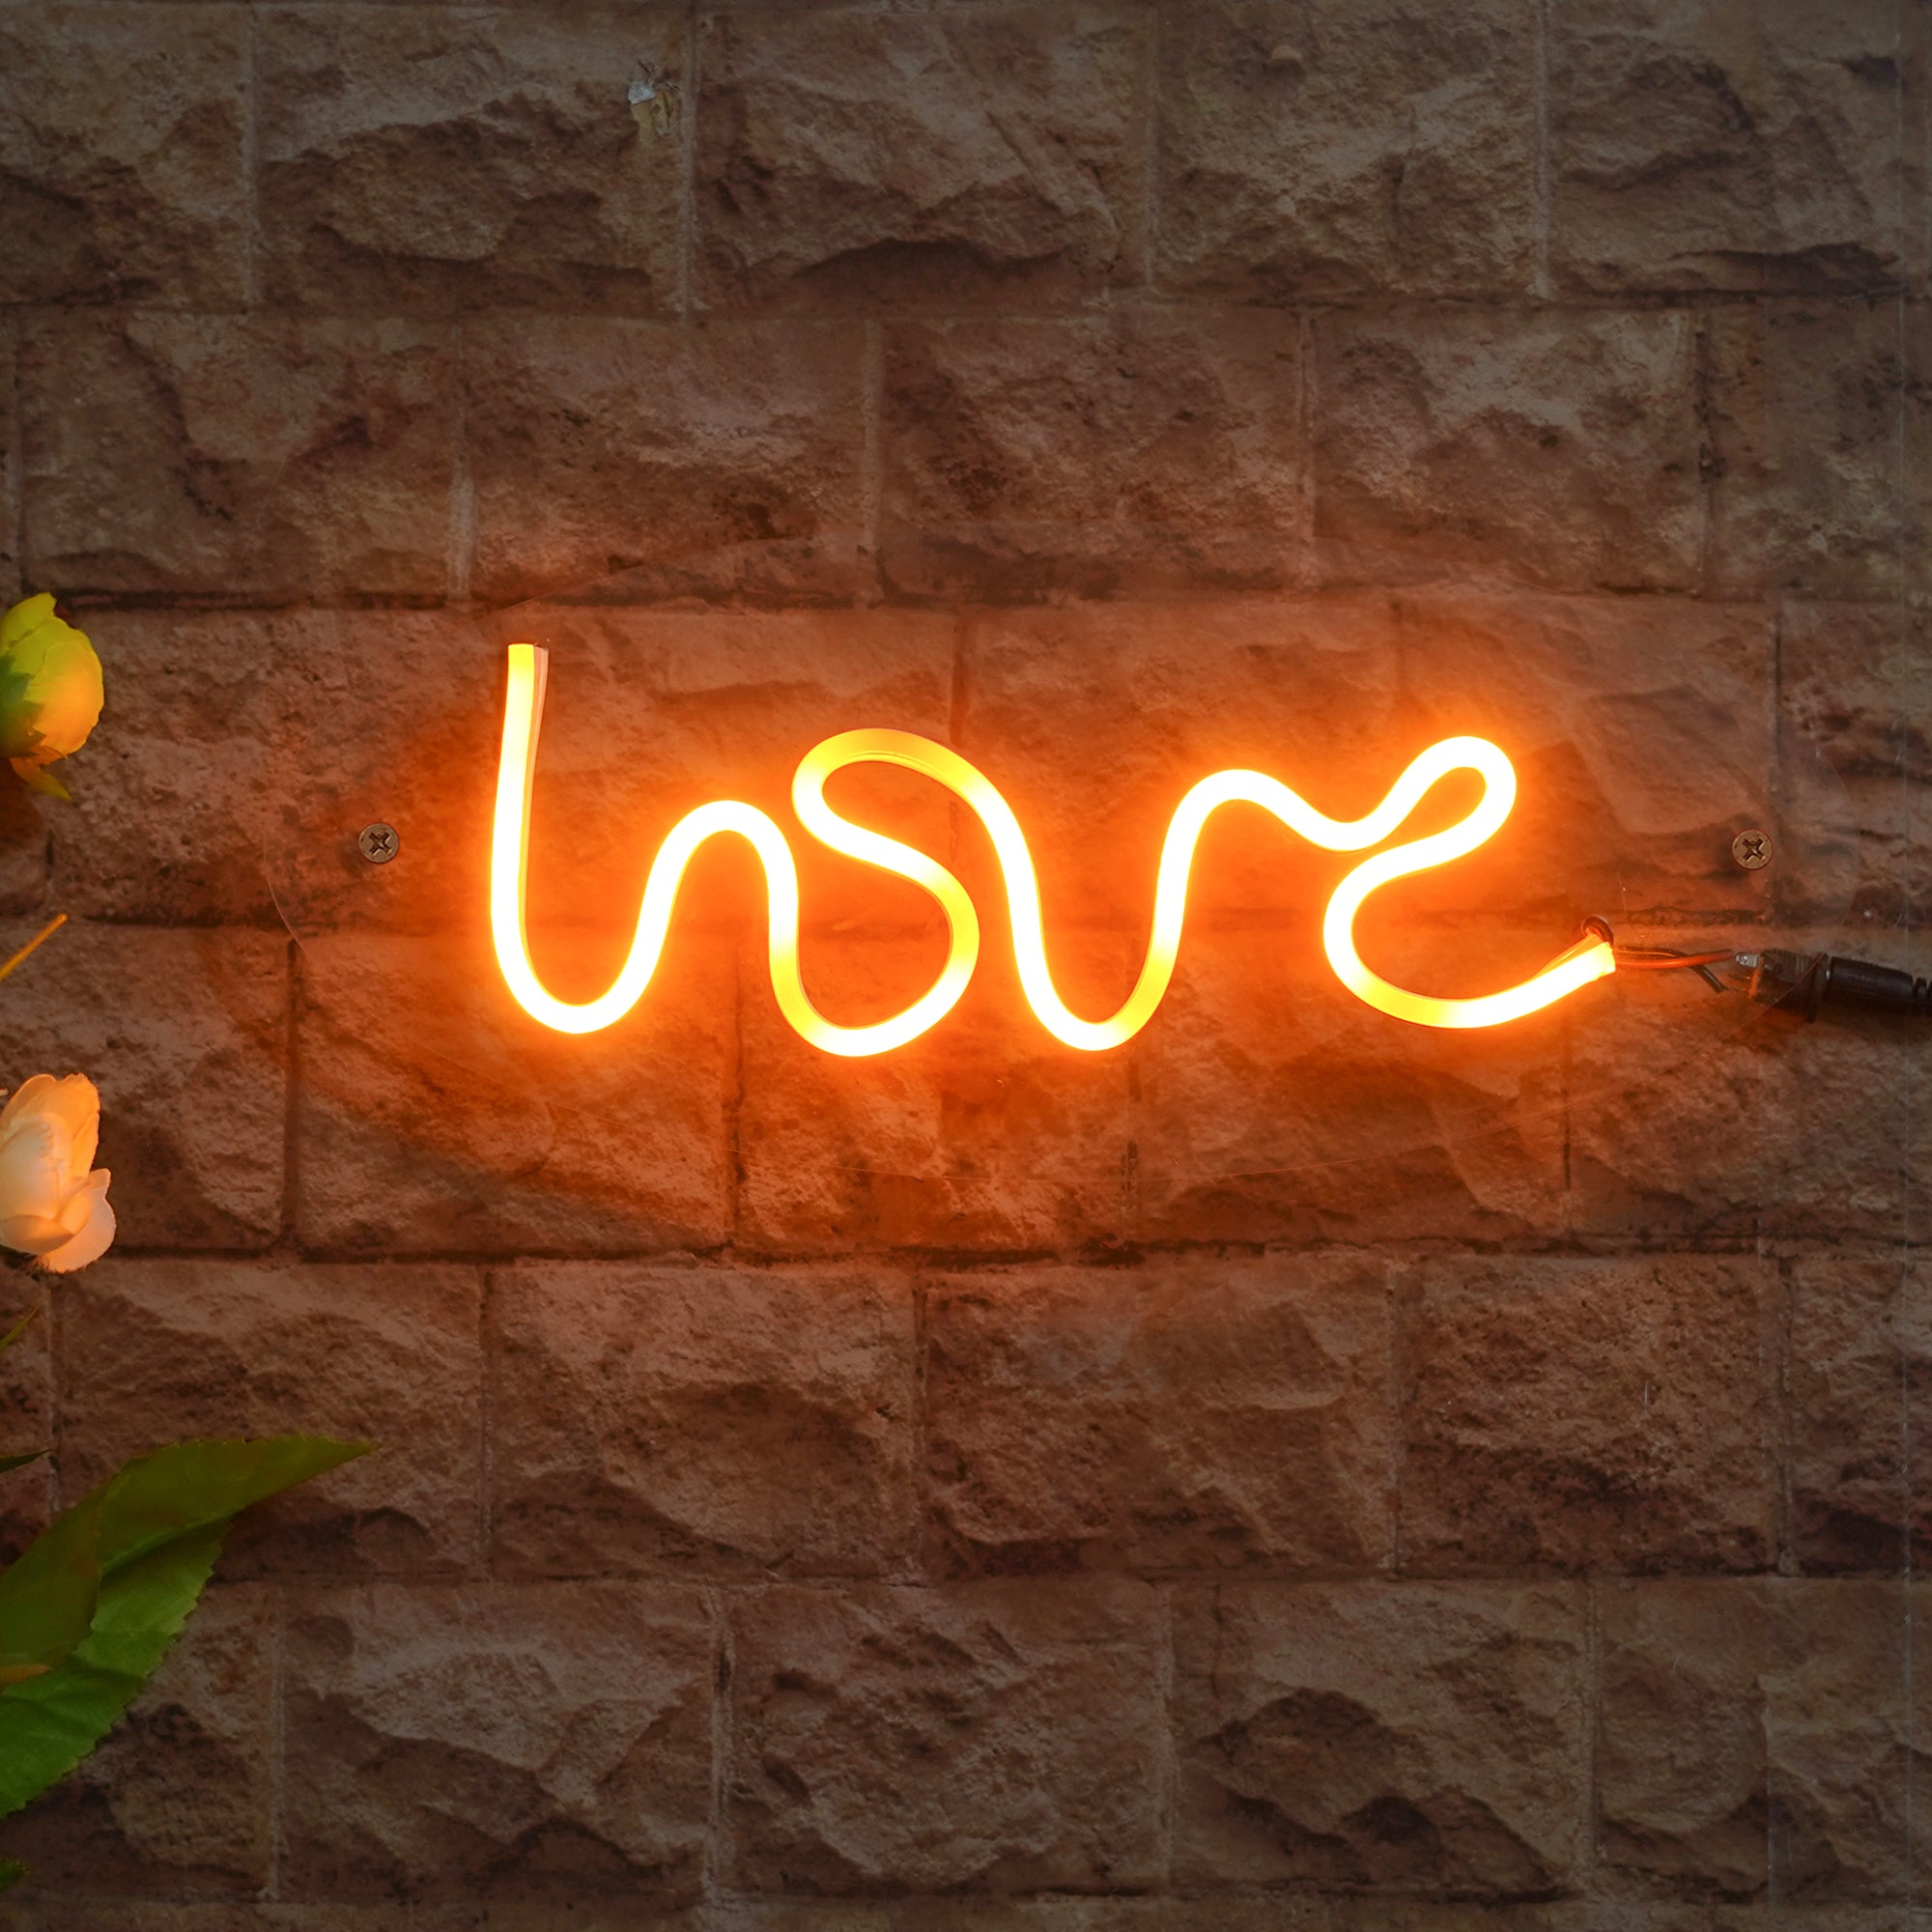 Love Wall Hanging LED Neon Light for Home, Office, Kids Room, Christmas, Wedding Decor